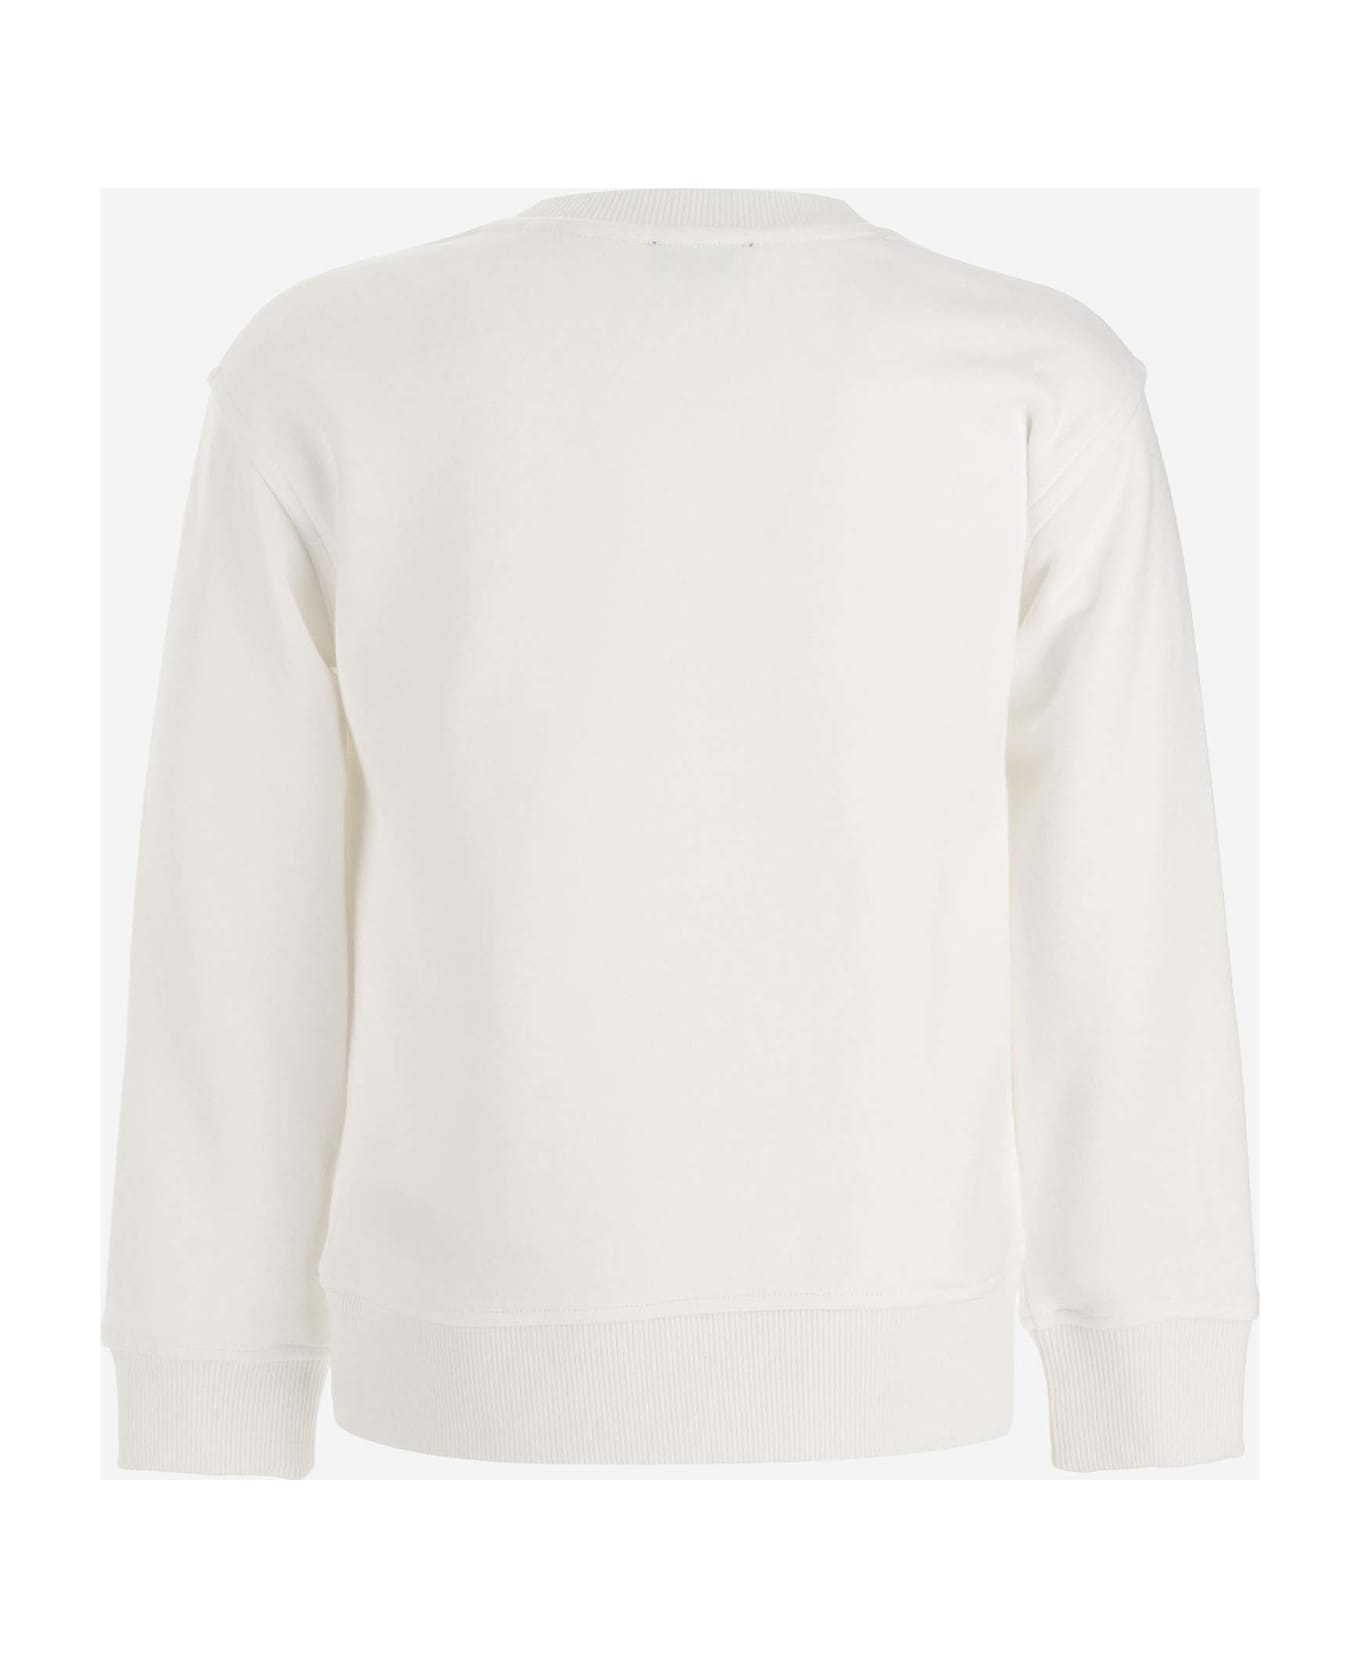 Burberry Cotton Sweatshirt With Ekd - White